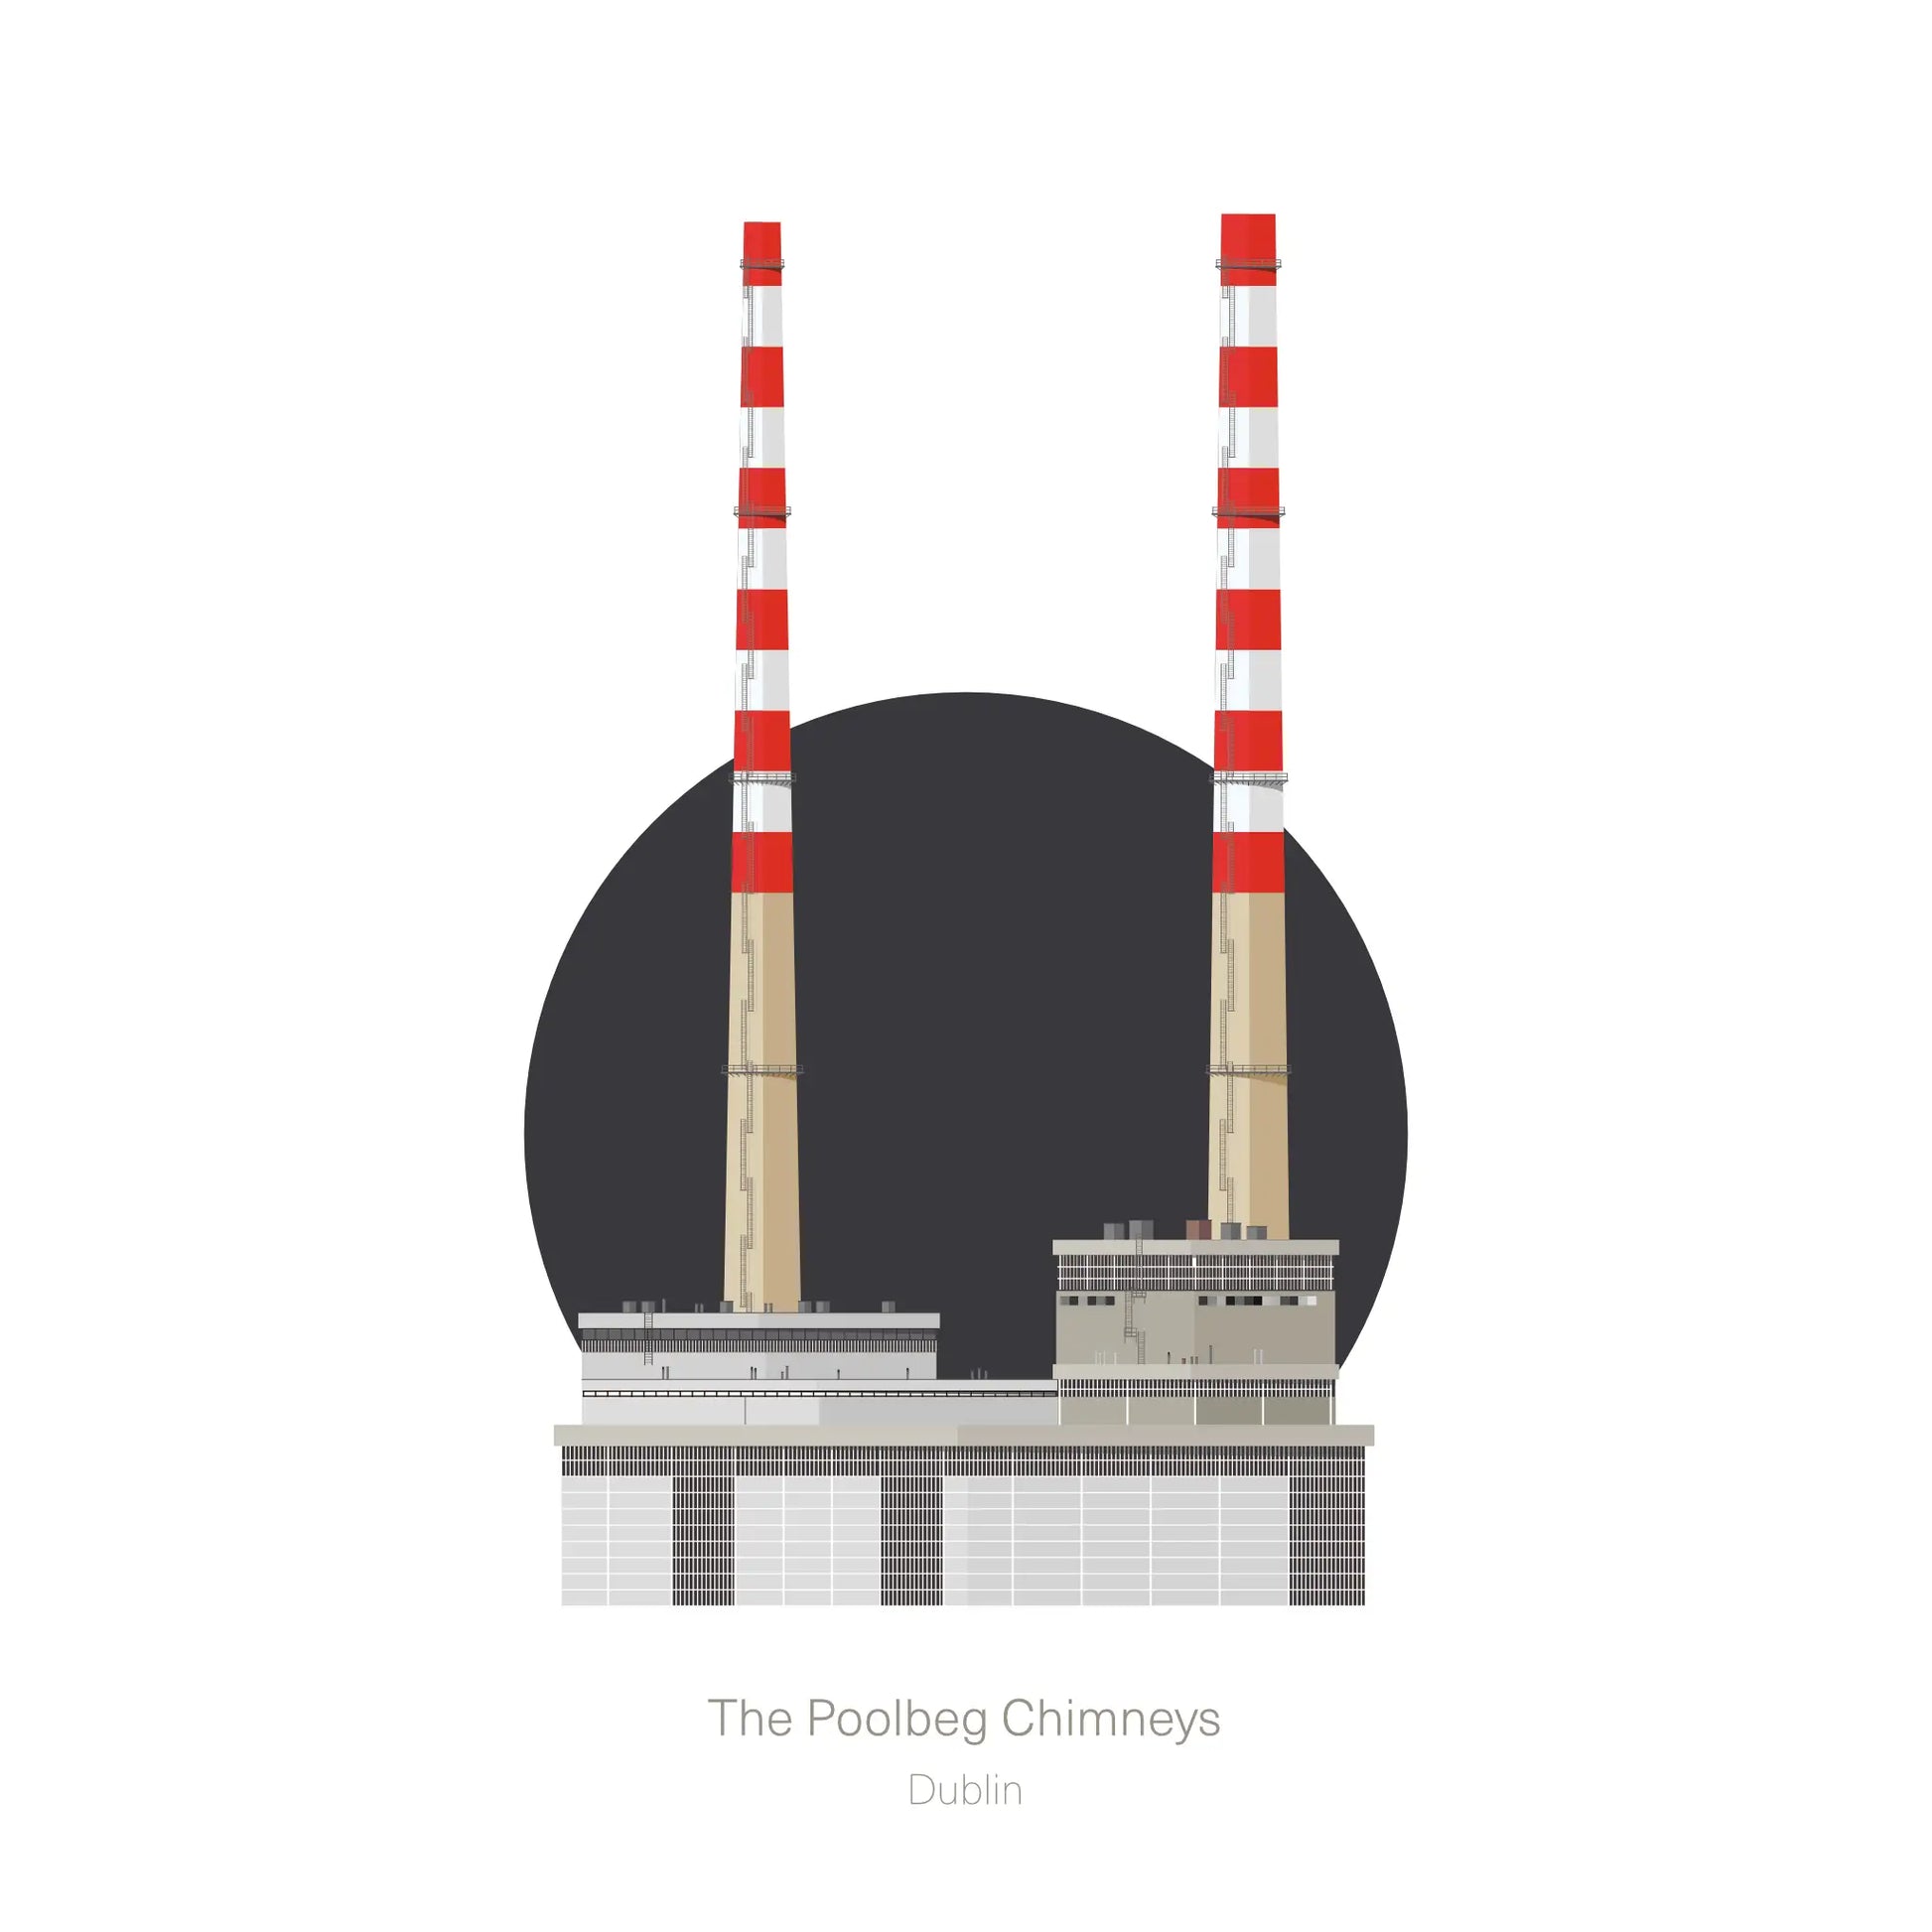 Illustration of the Poolbeg Chimneys, power plant in Dublin Ireland, detail.